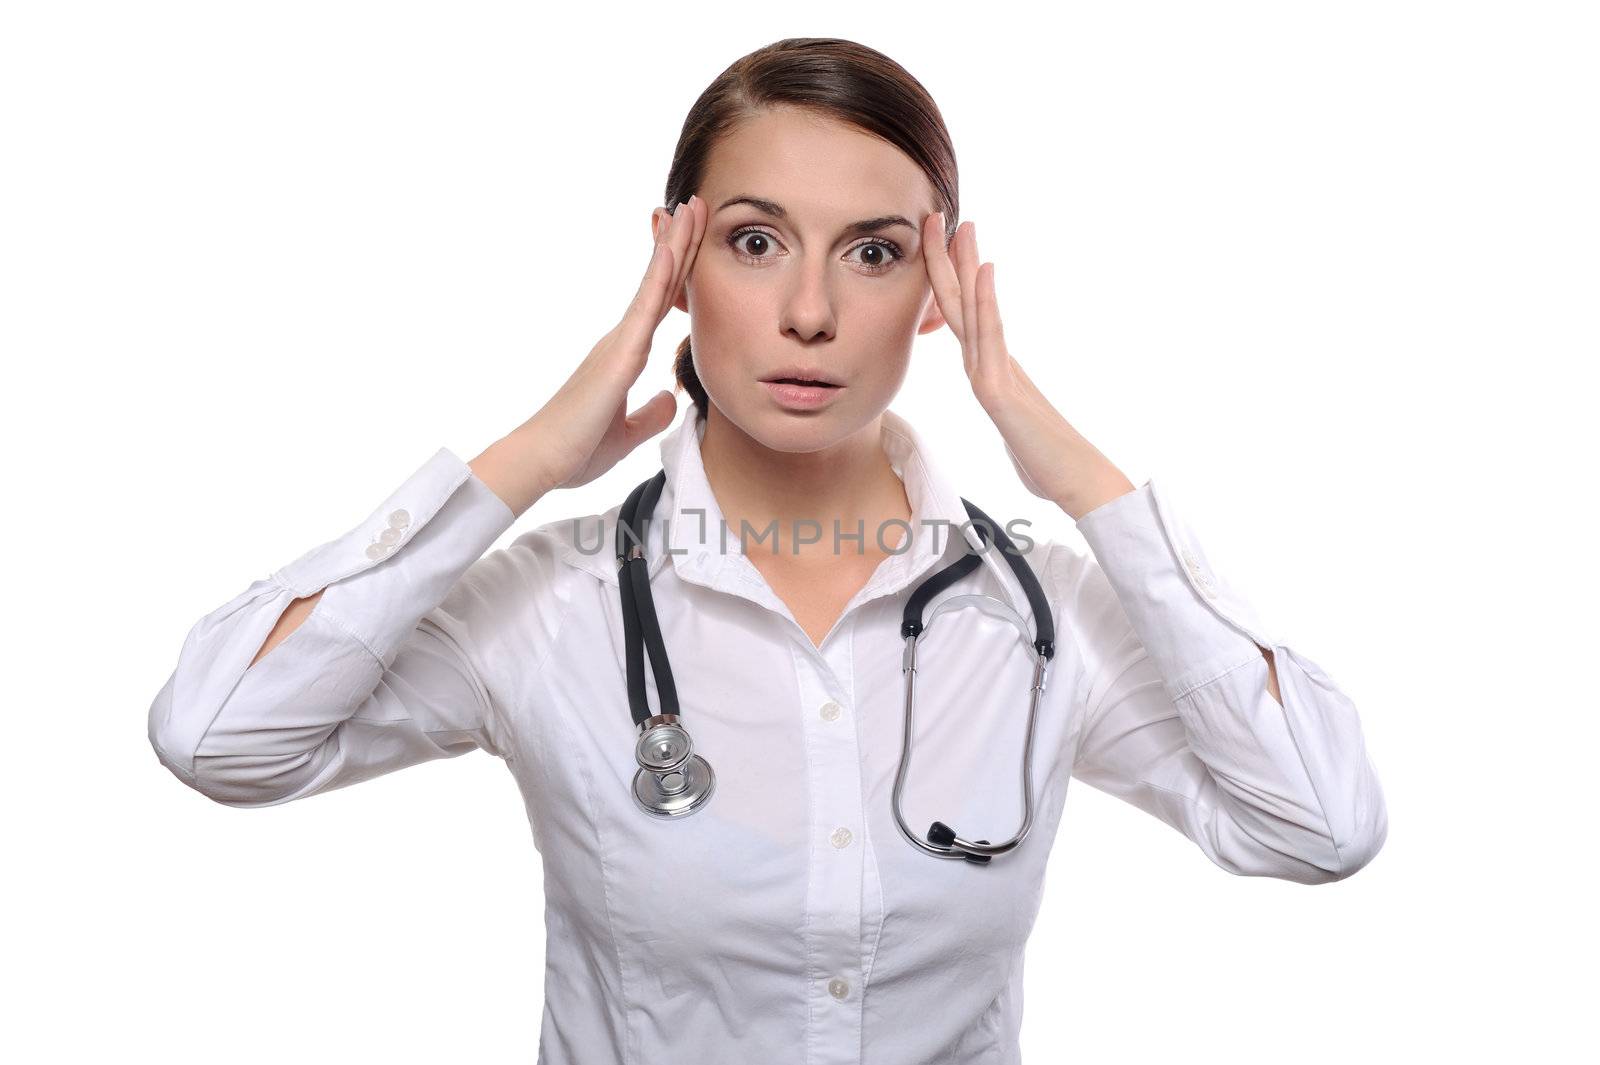 Doctor with migraine headache by kirs-ua